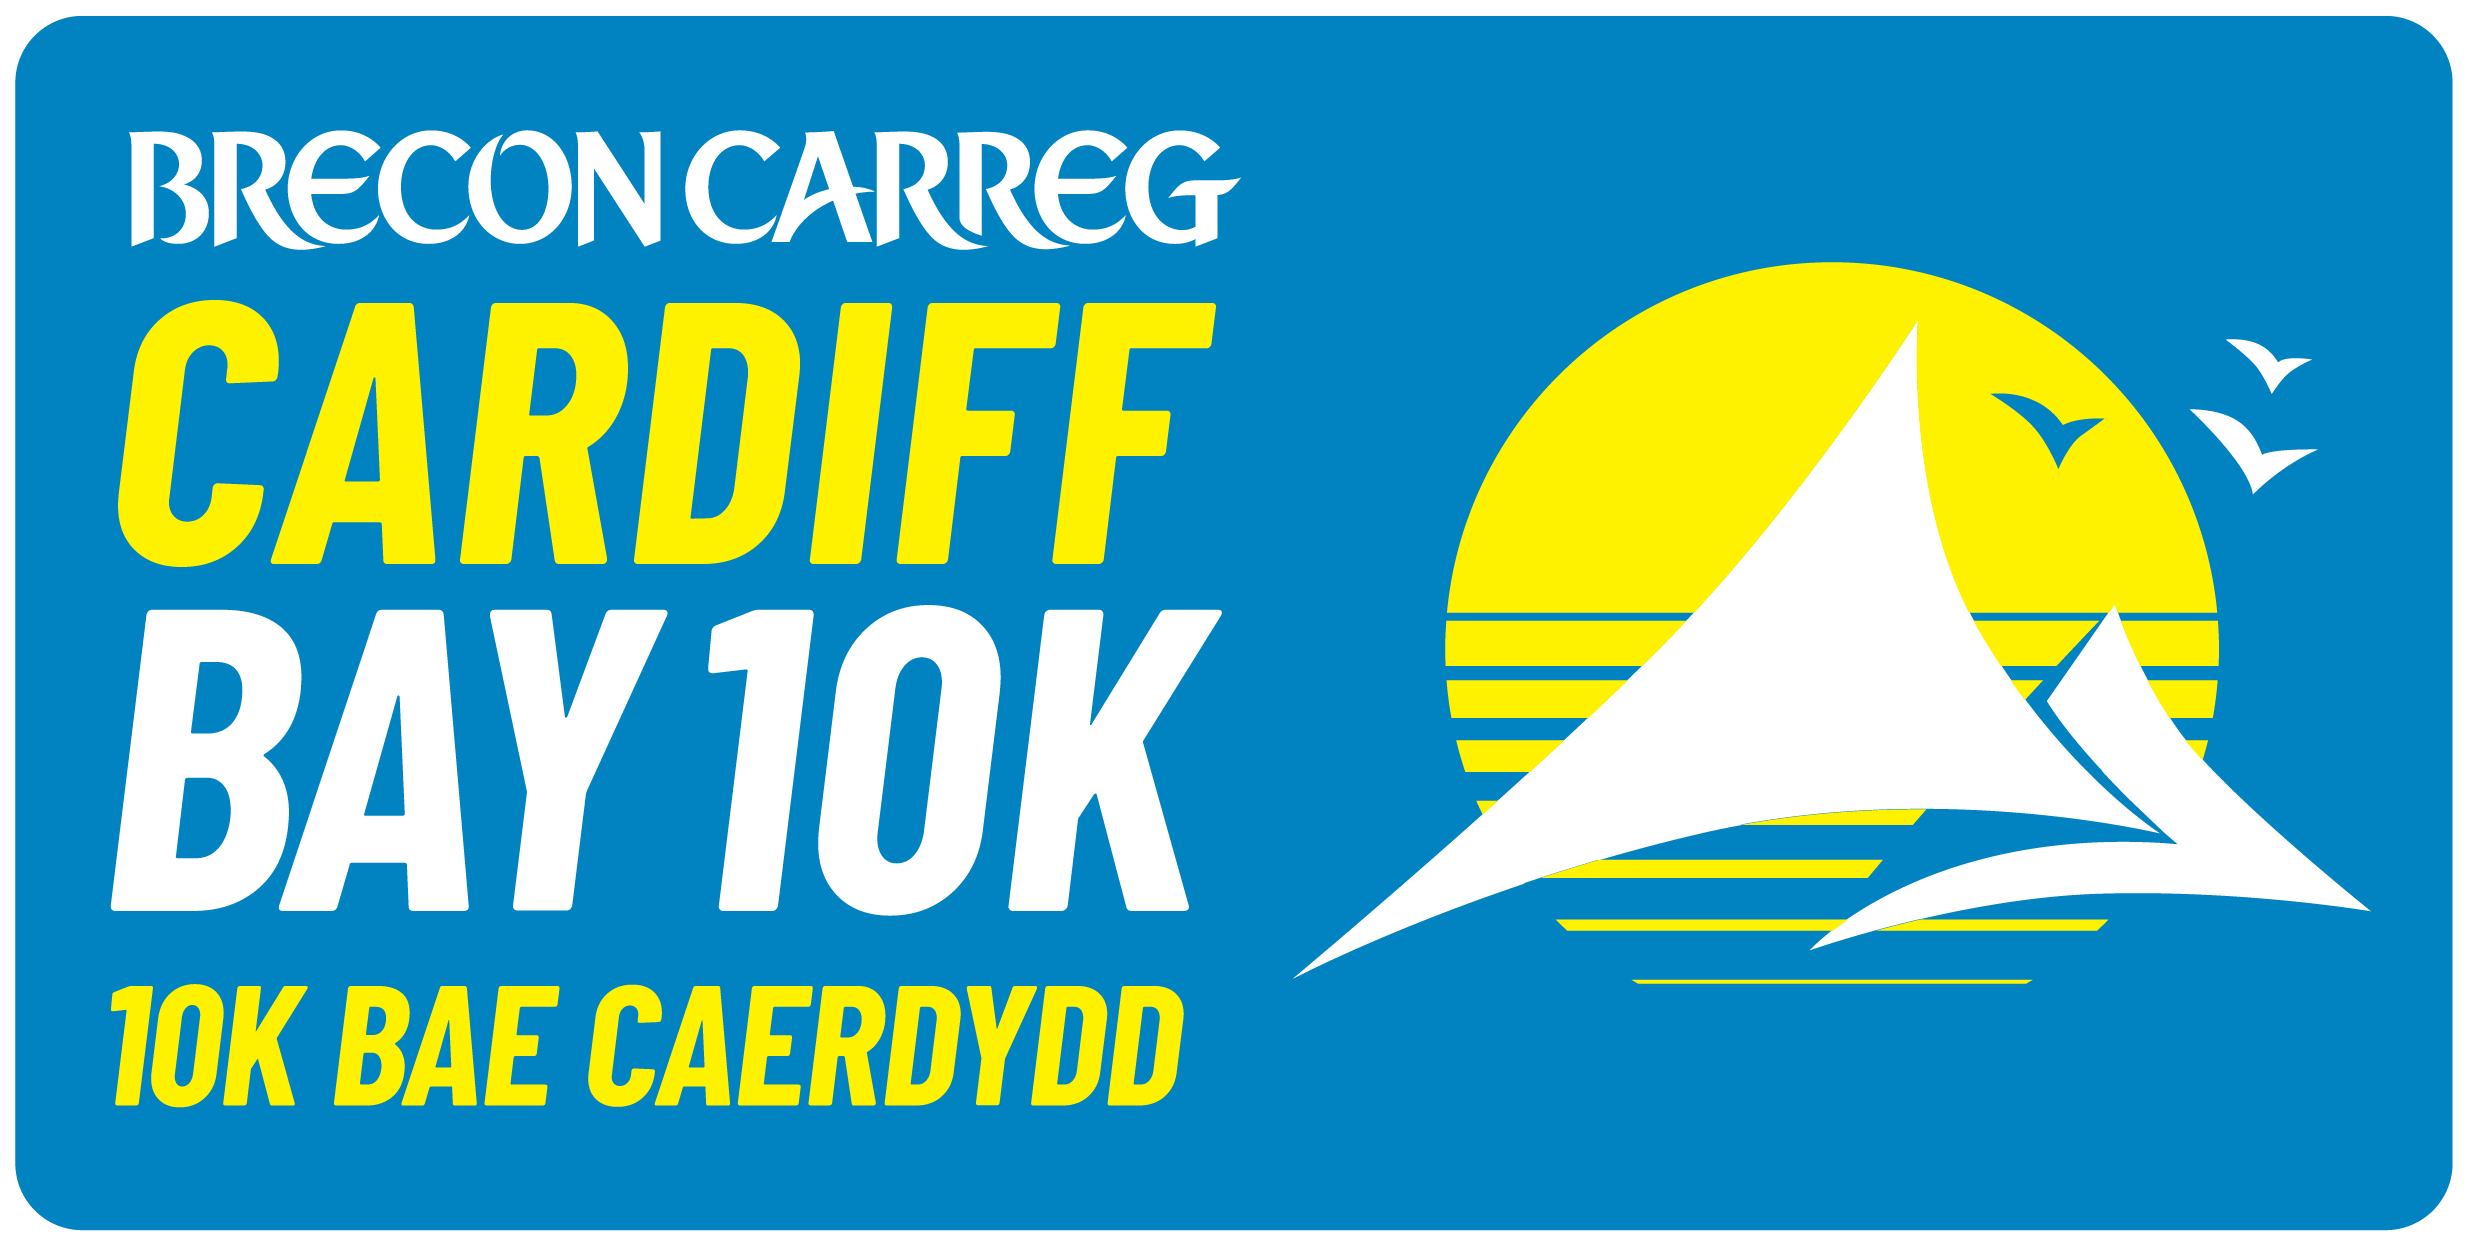 Brecon Carreg Cardiff Bay 10K